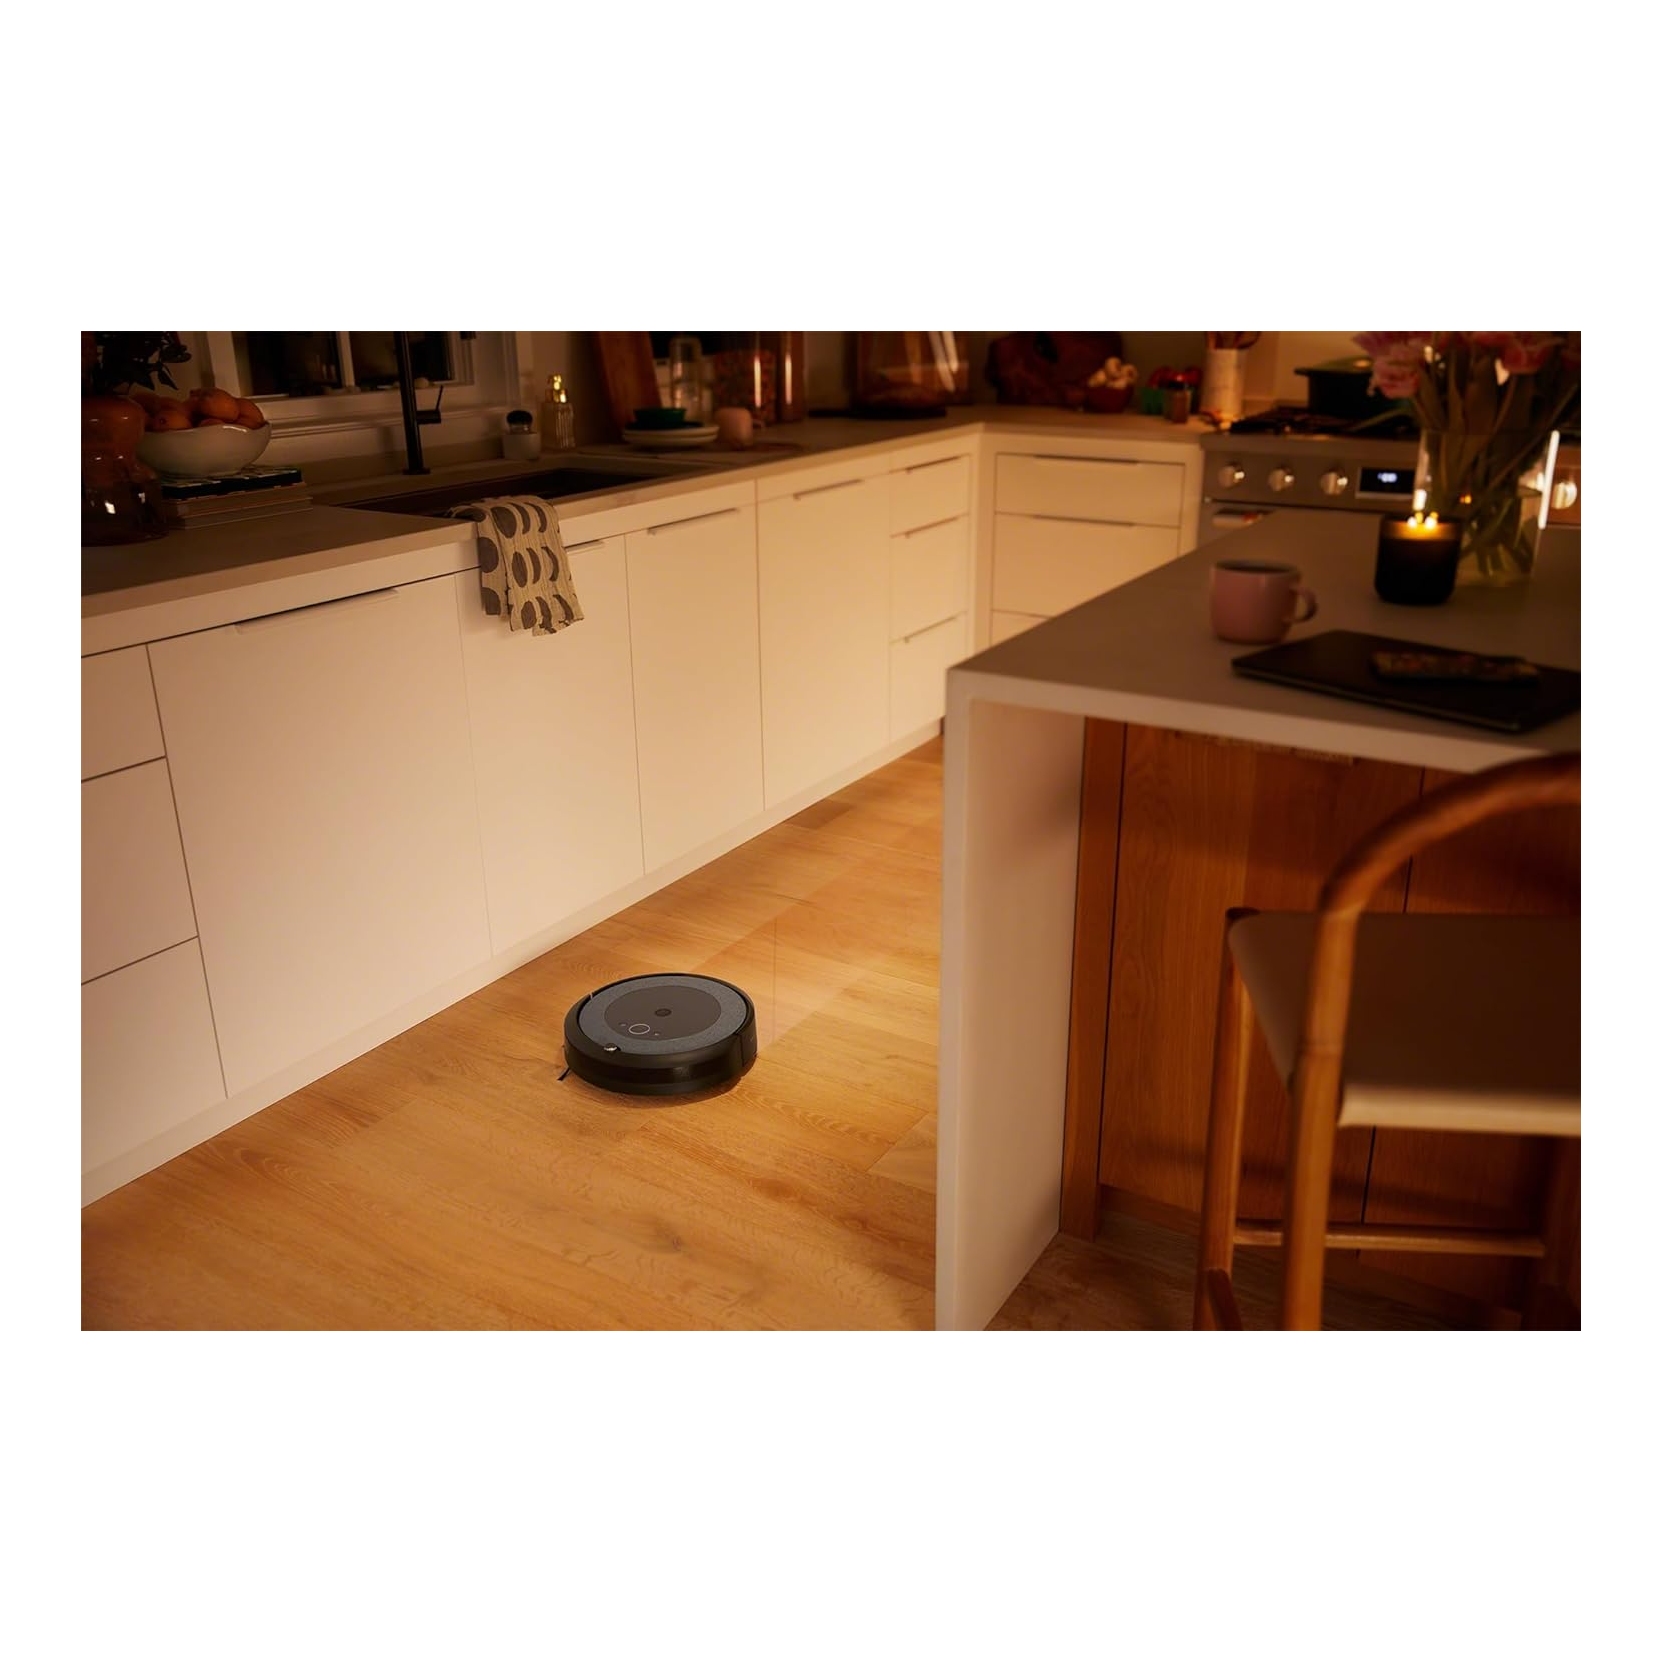 iRobot Roomba I5 Combo aspirapolvere e lavapavimenti con kit